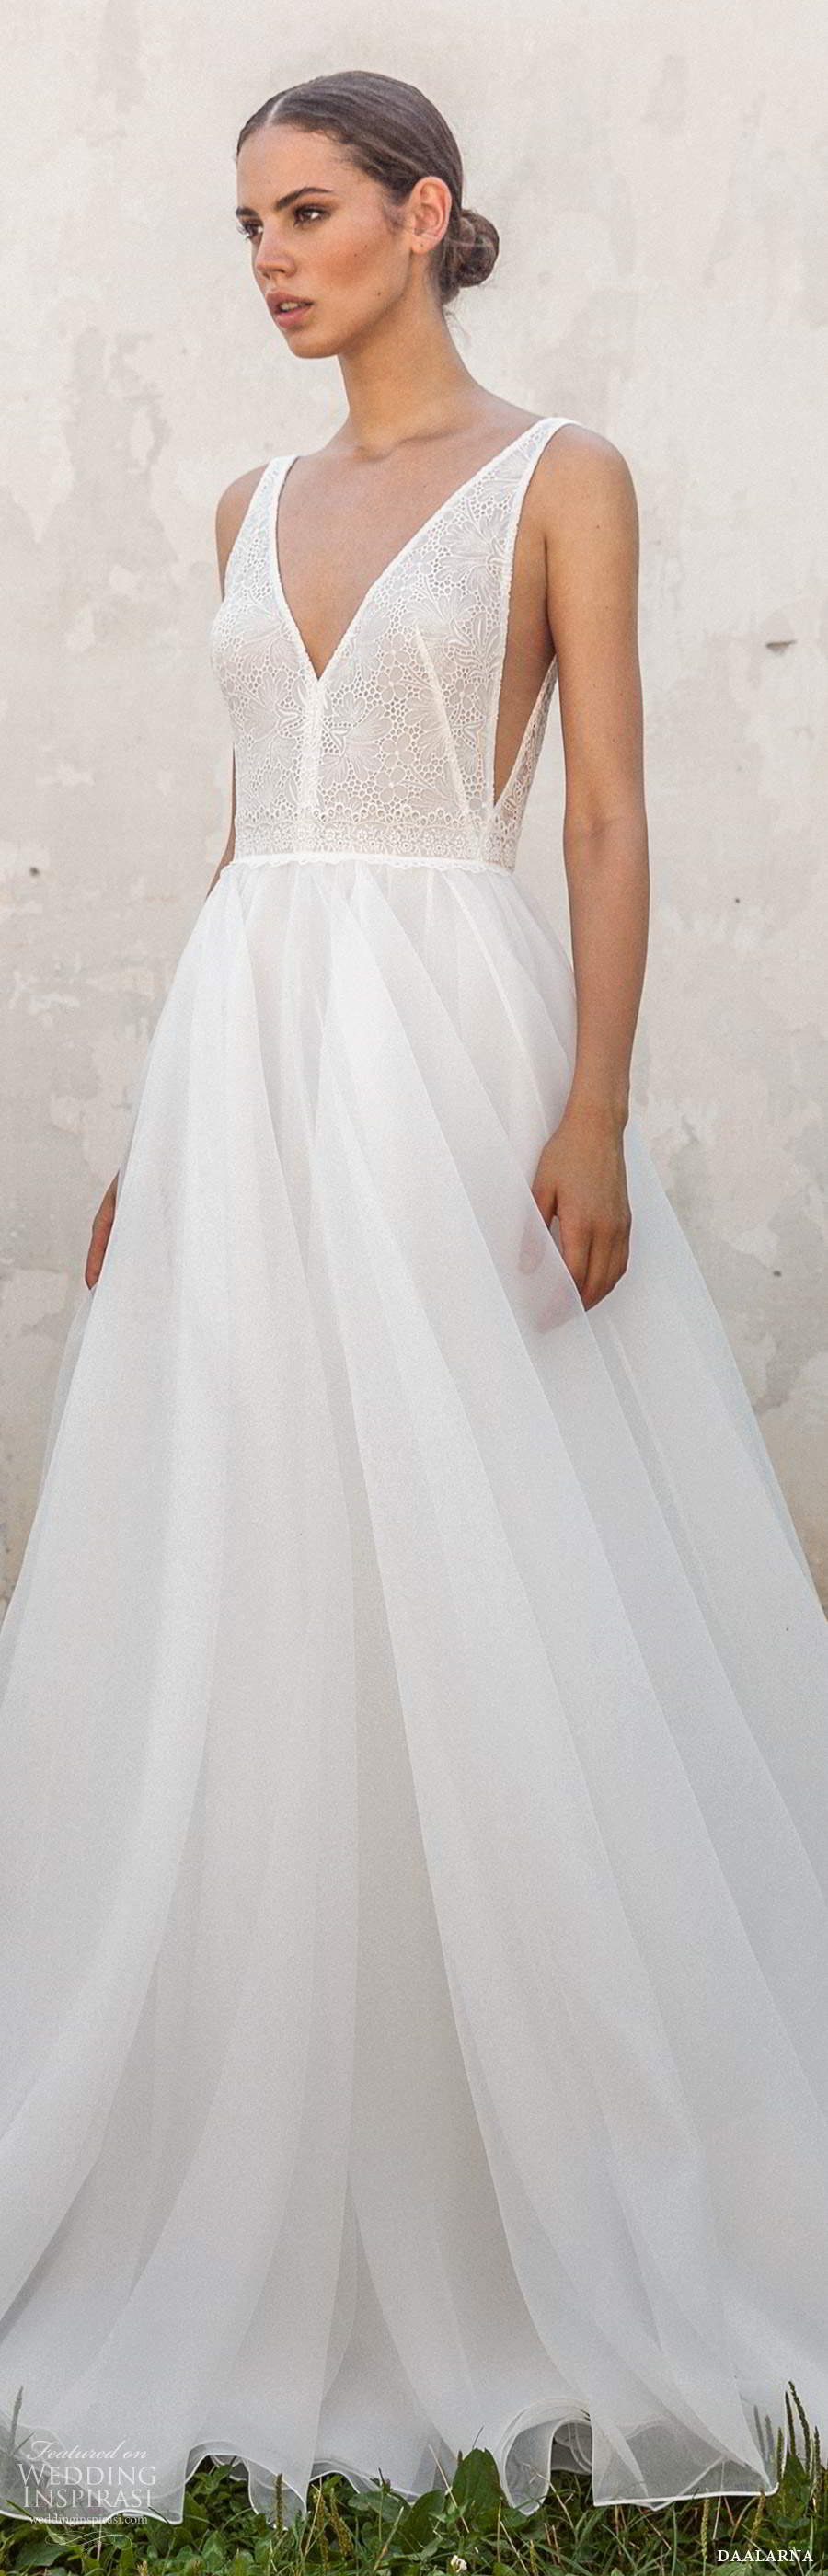 daalarna fall 2020 bridal sleeveless straps v neckline embellished bodice a line ball gown wedding dress chapel train (22) mv